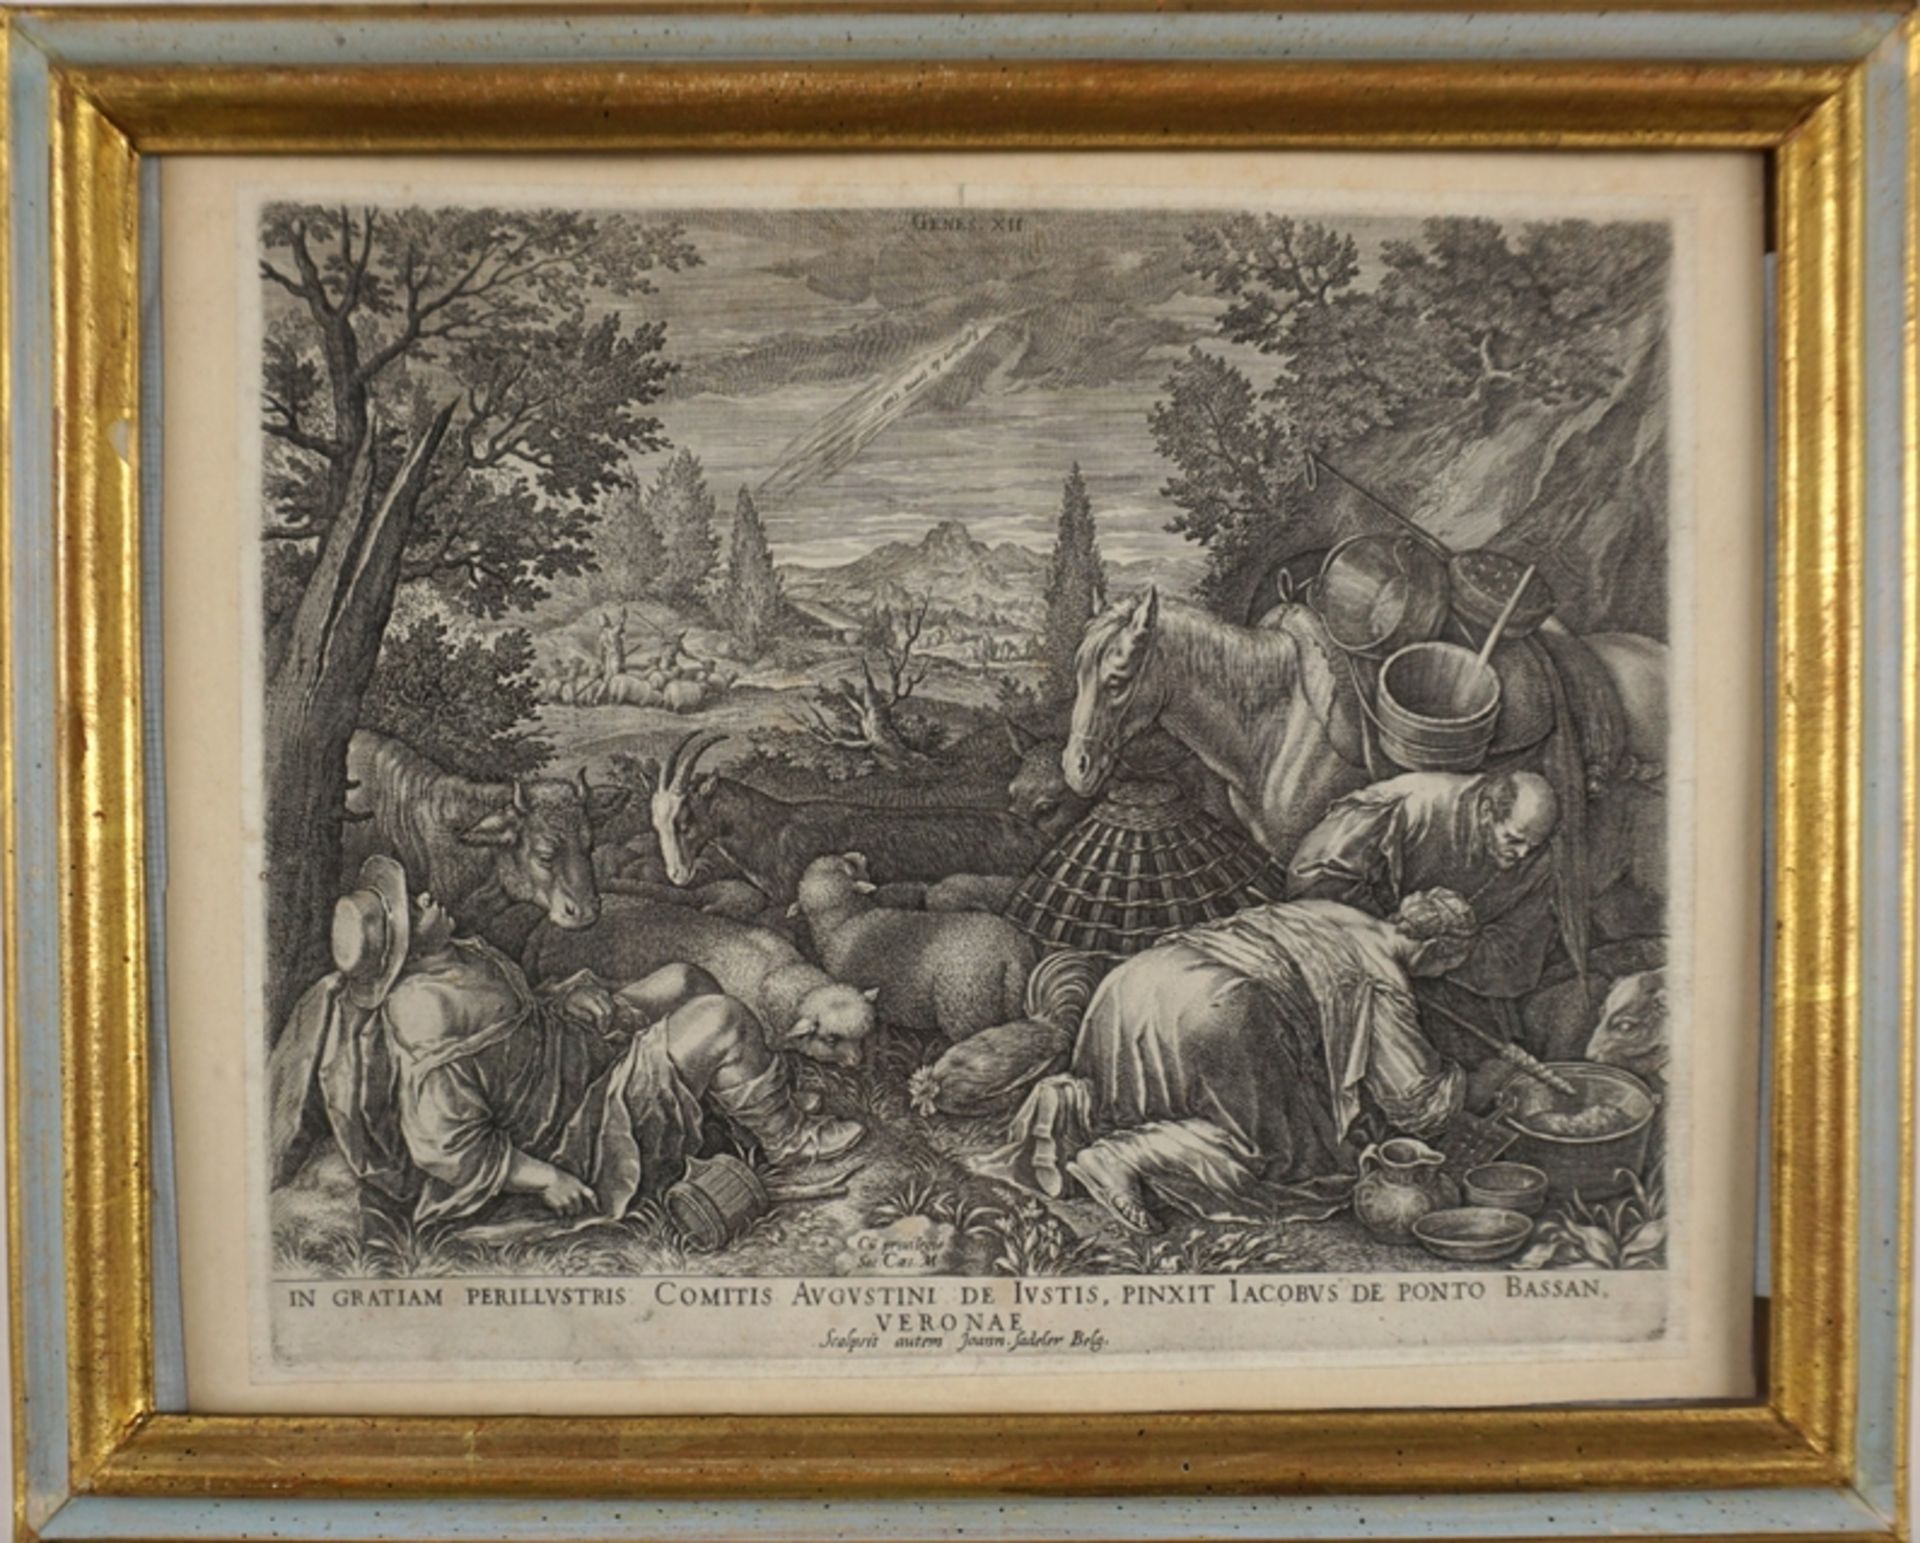 Johannes Sadeler I (1550-1600), "Verkündigung an die Hirten", Kupferstich nach Jacopo Bassano